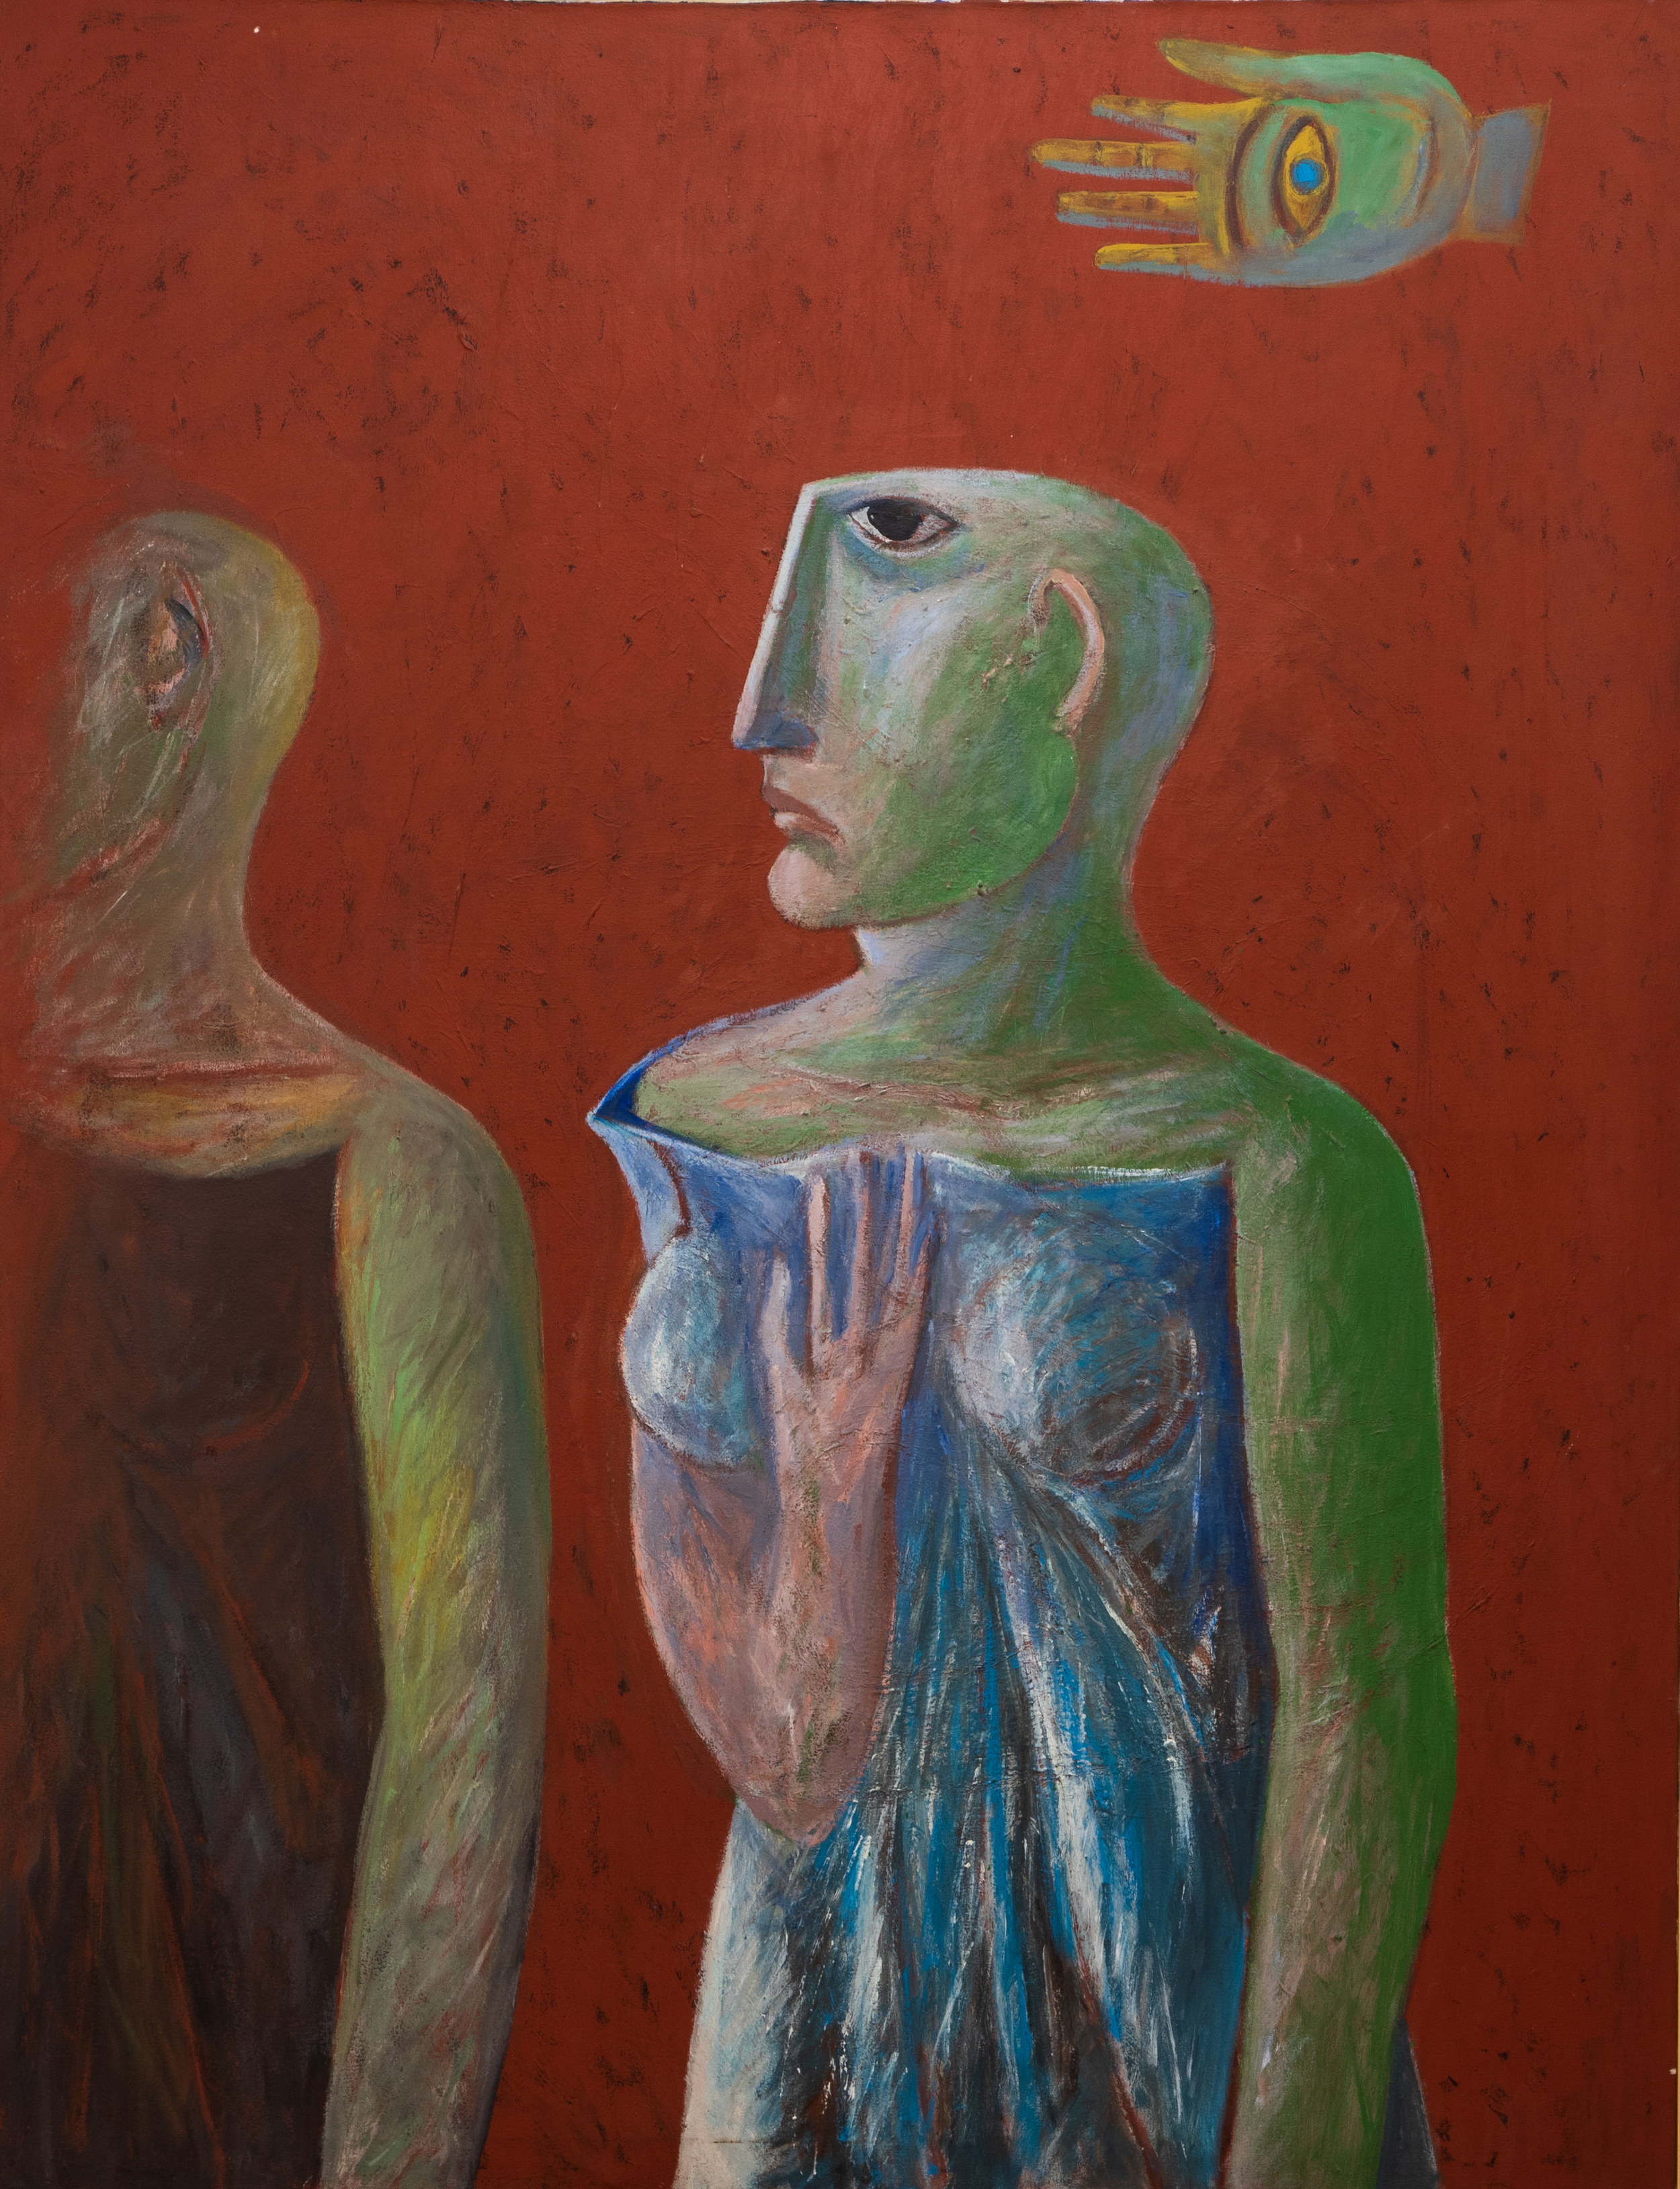  Superstition, 2001, Acrylic on canvas,  200 x 154 cm  